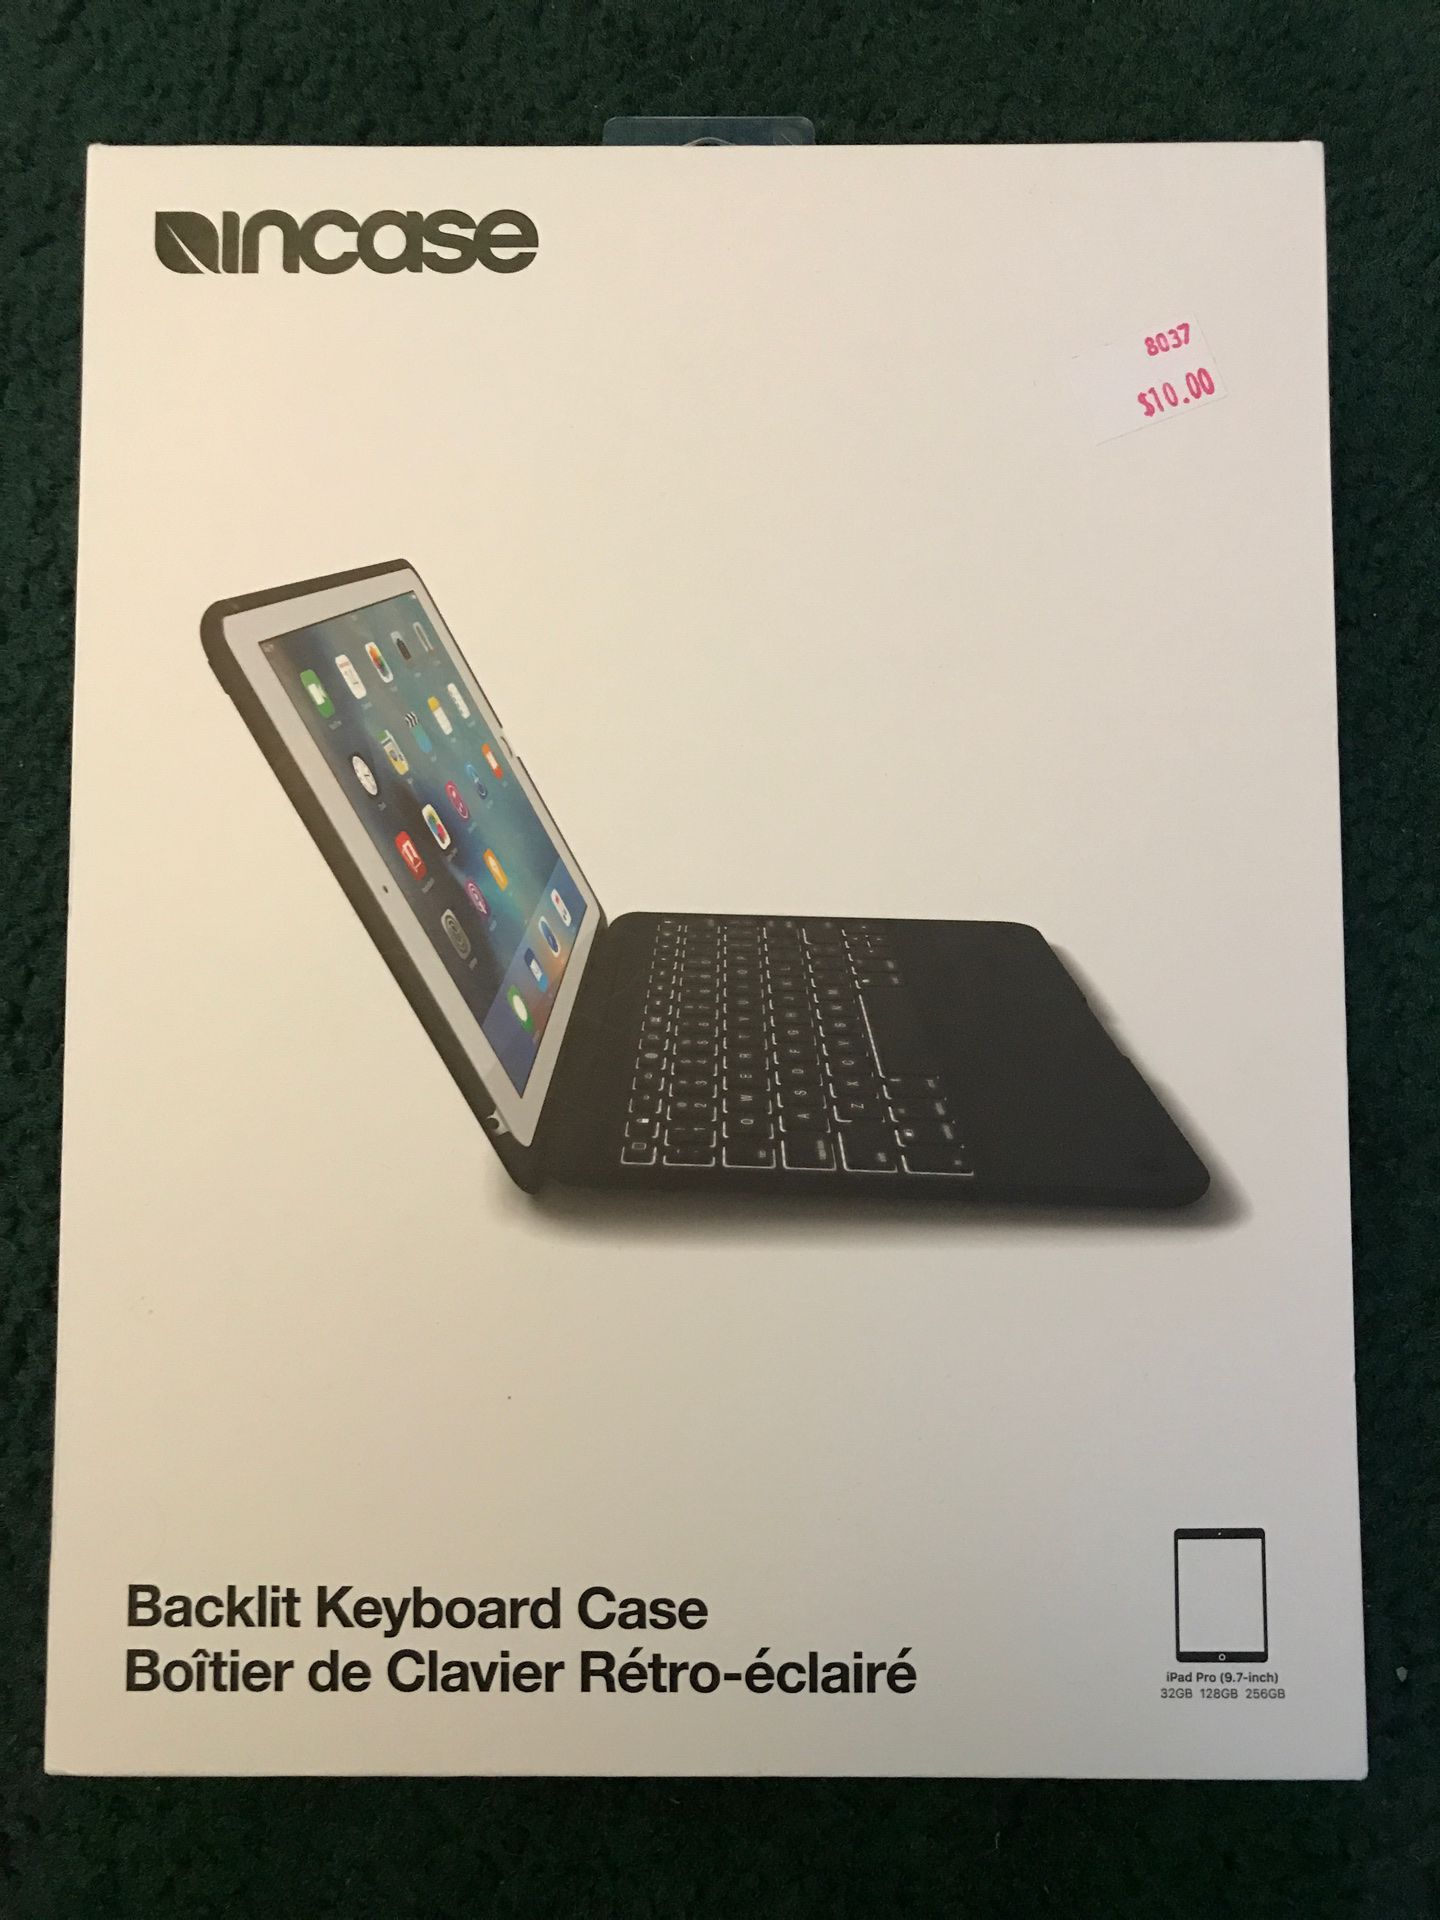 Back lit keyboard case (Bluetooth)